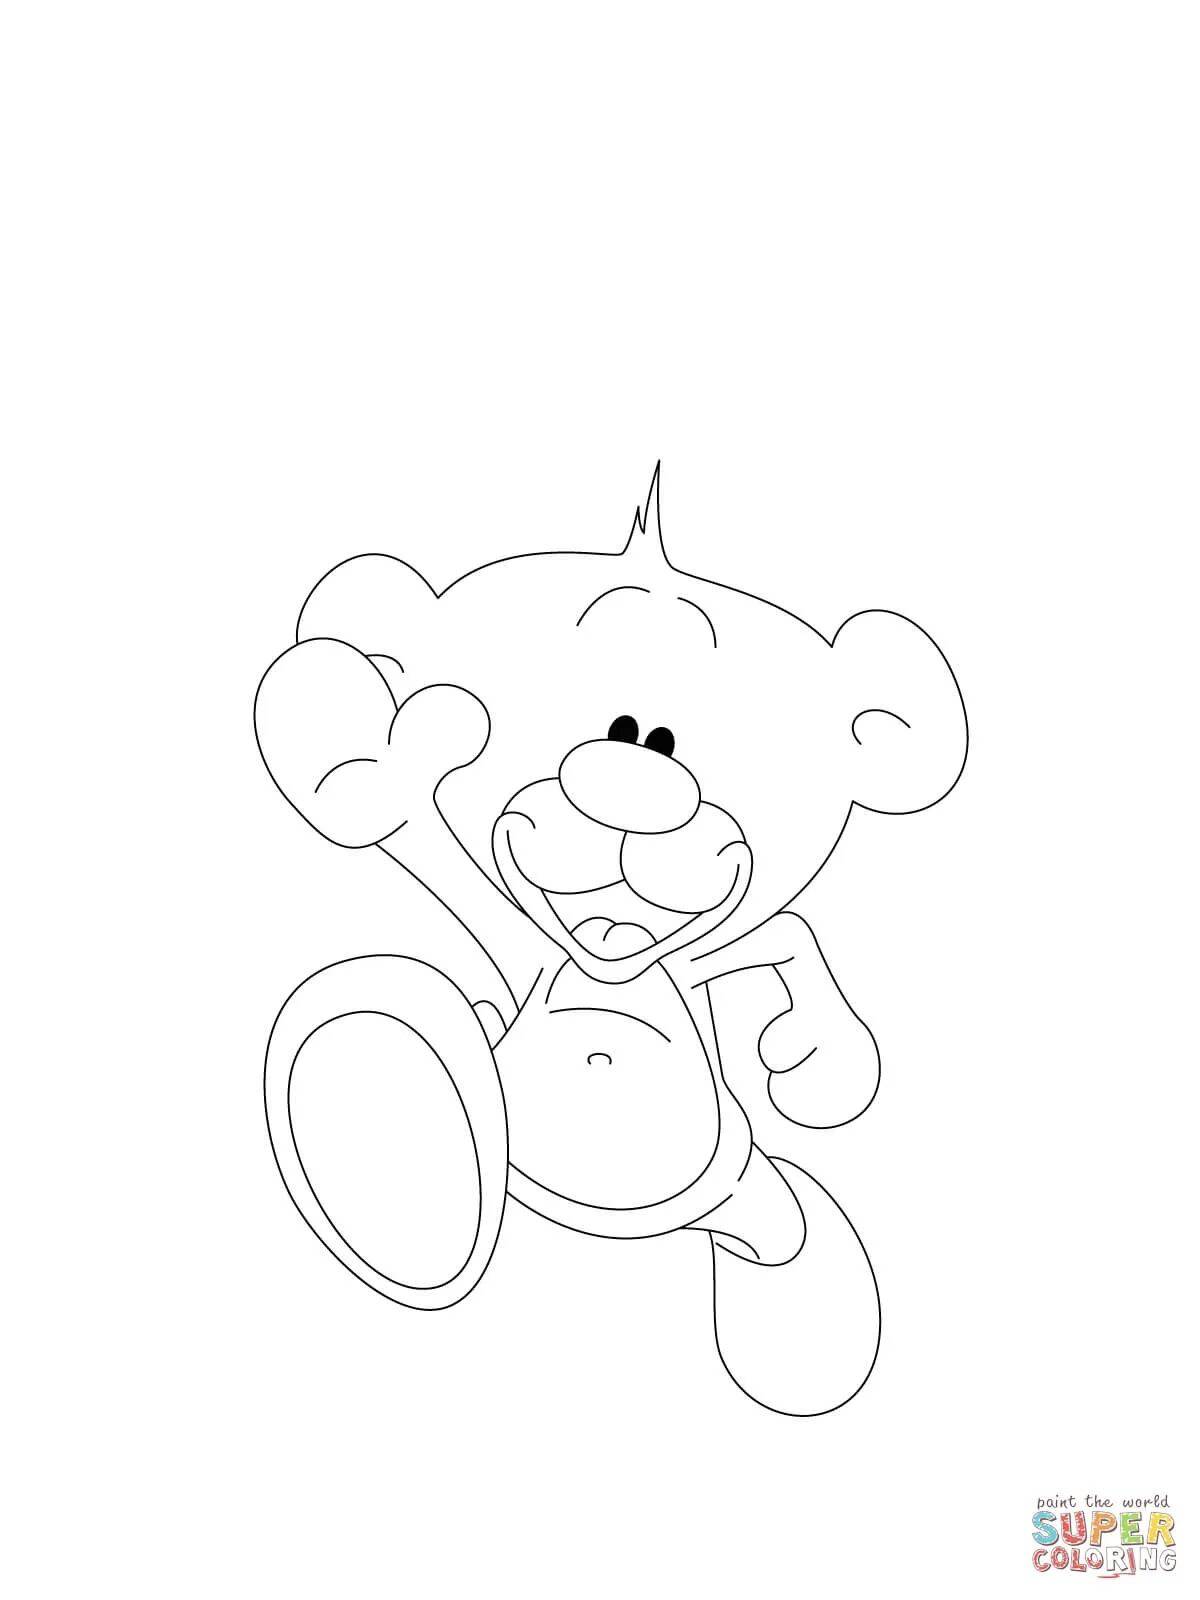 Funny teddy bear coloring book